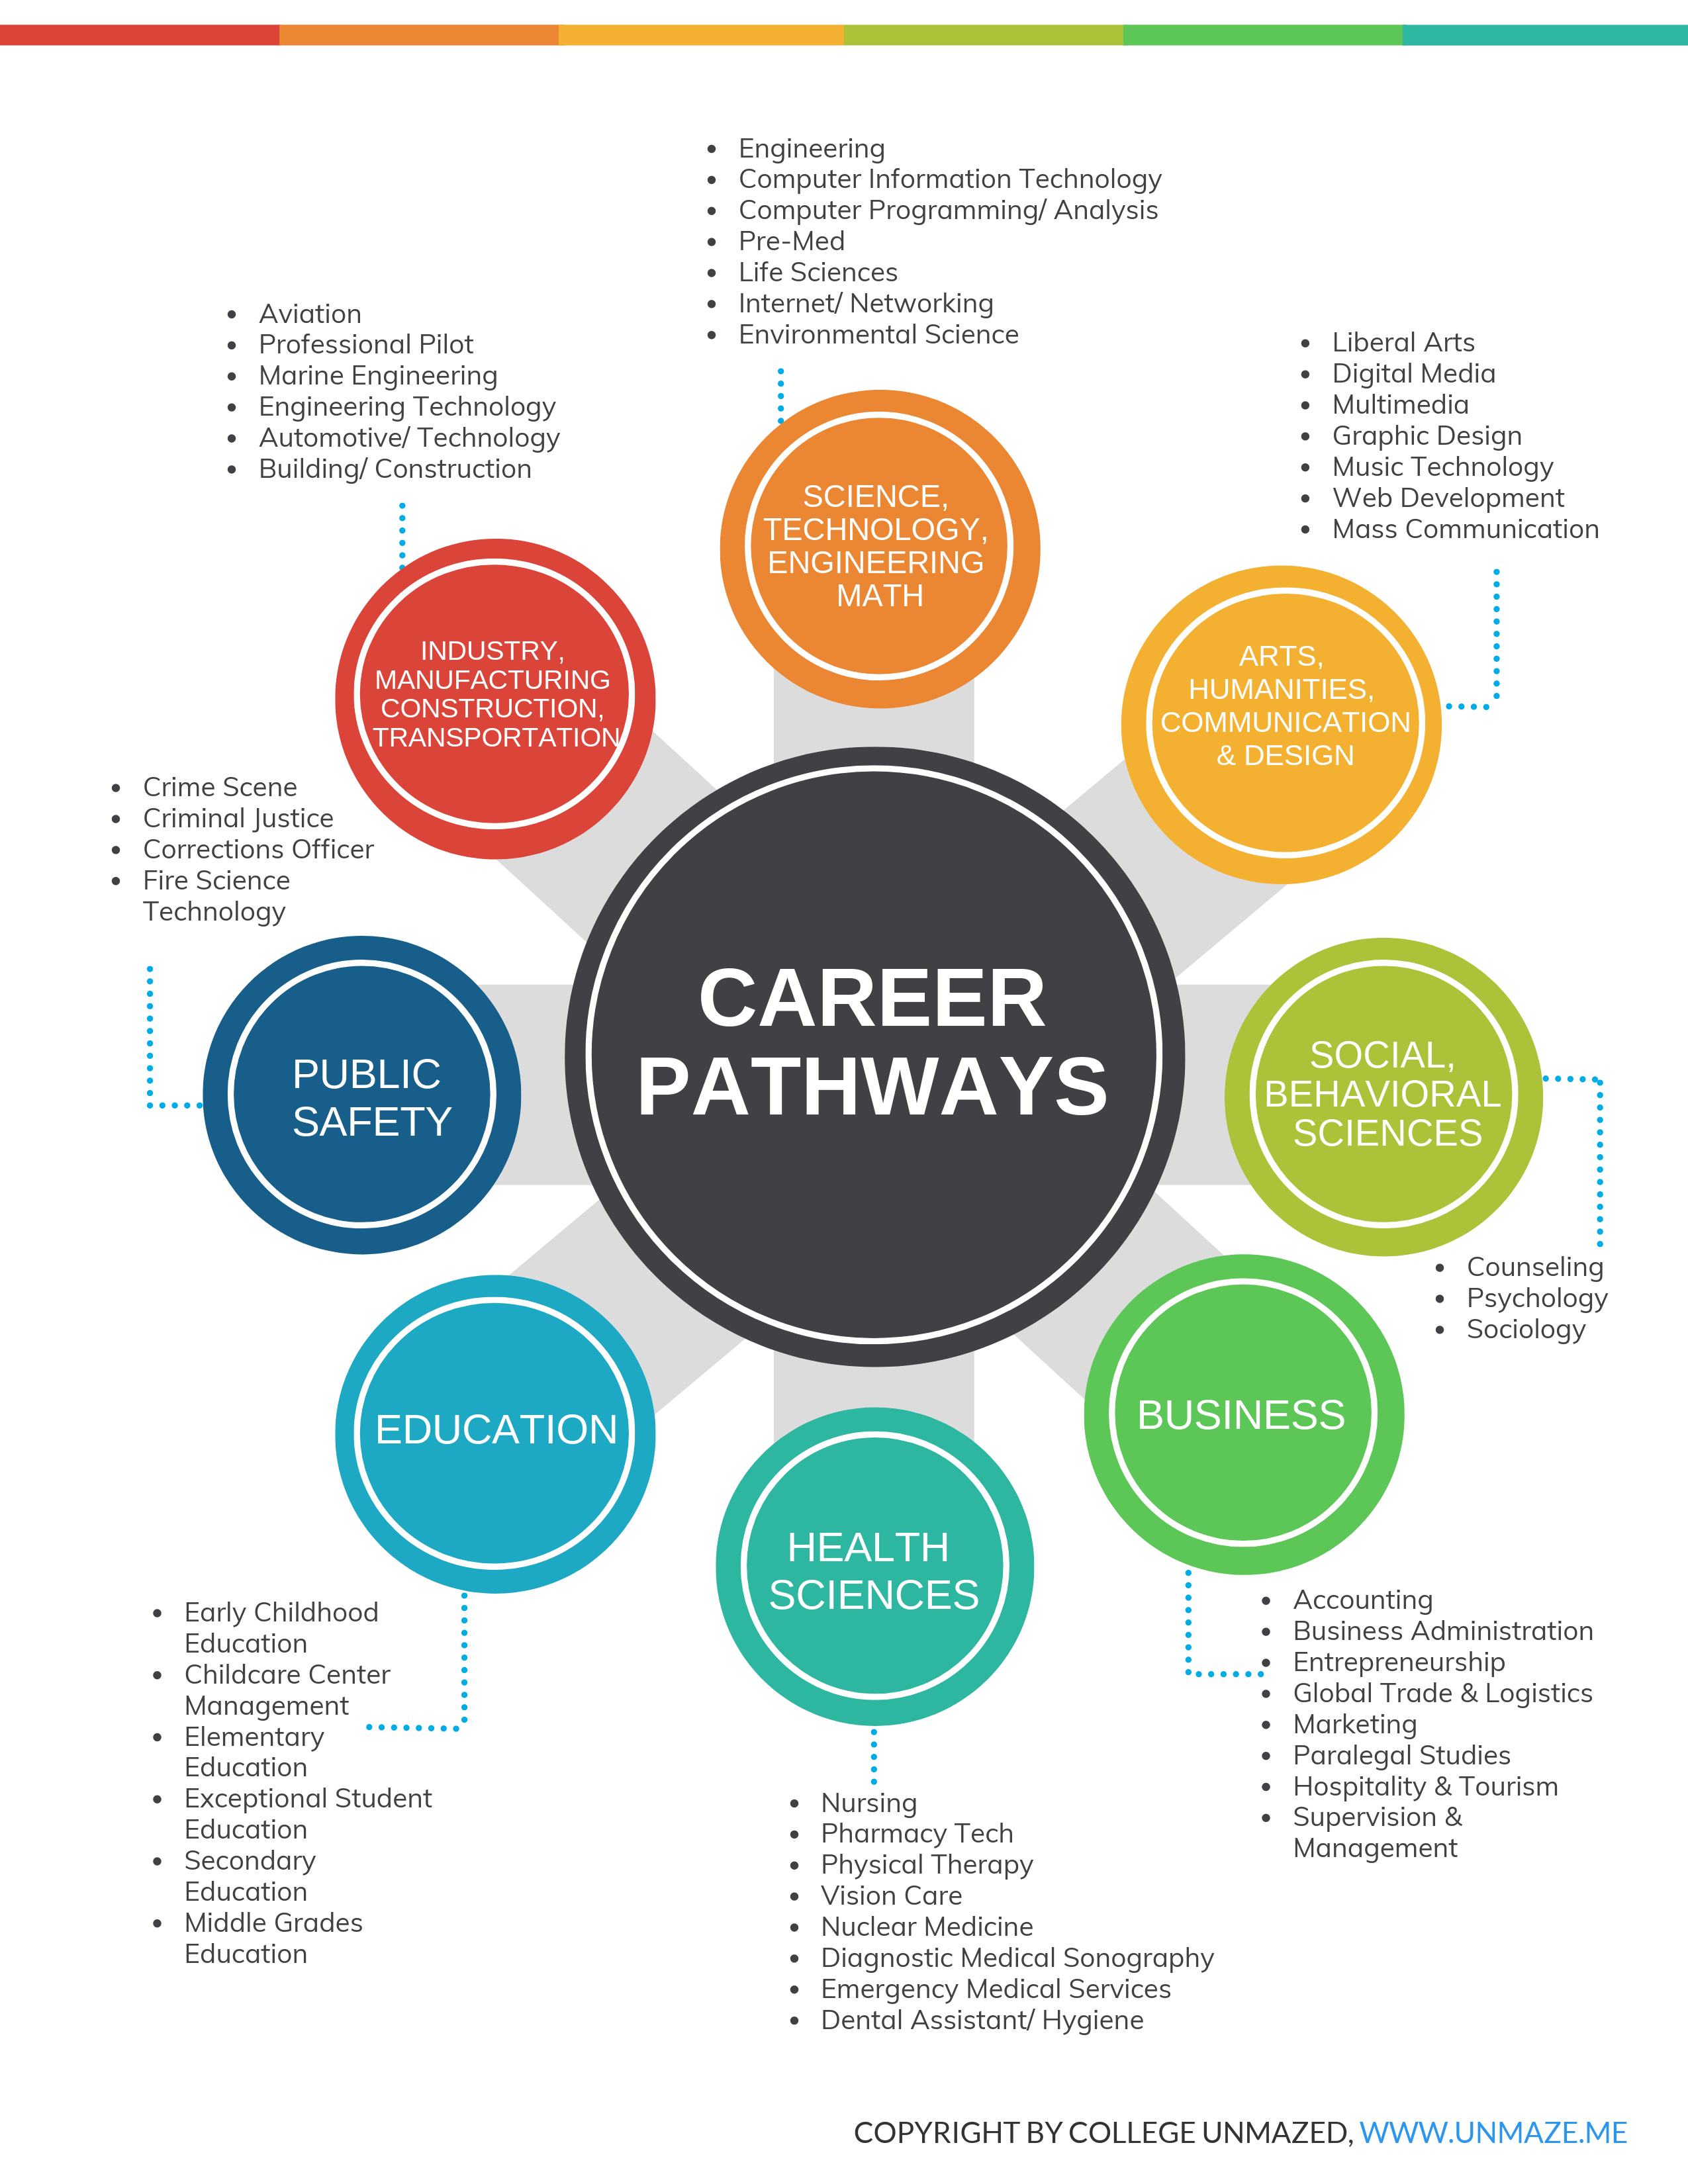 Career Pathways Infographic Amanda Sterk